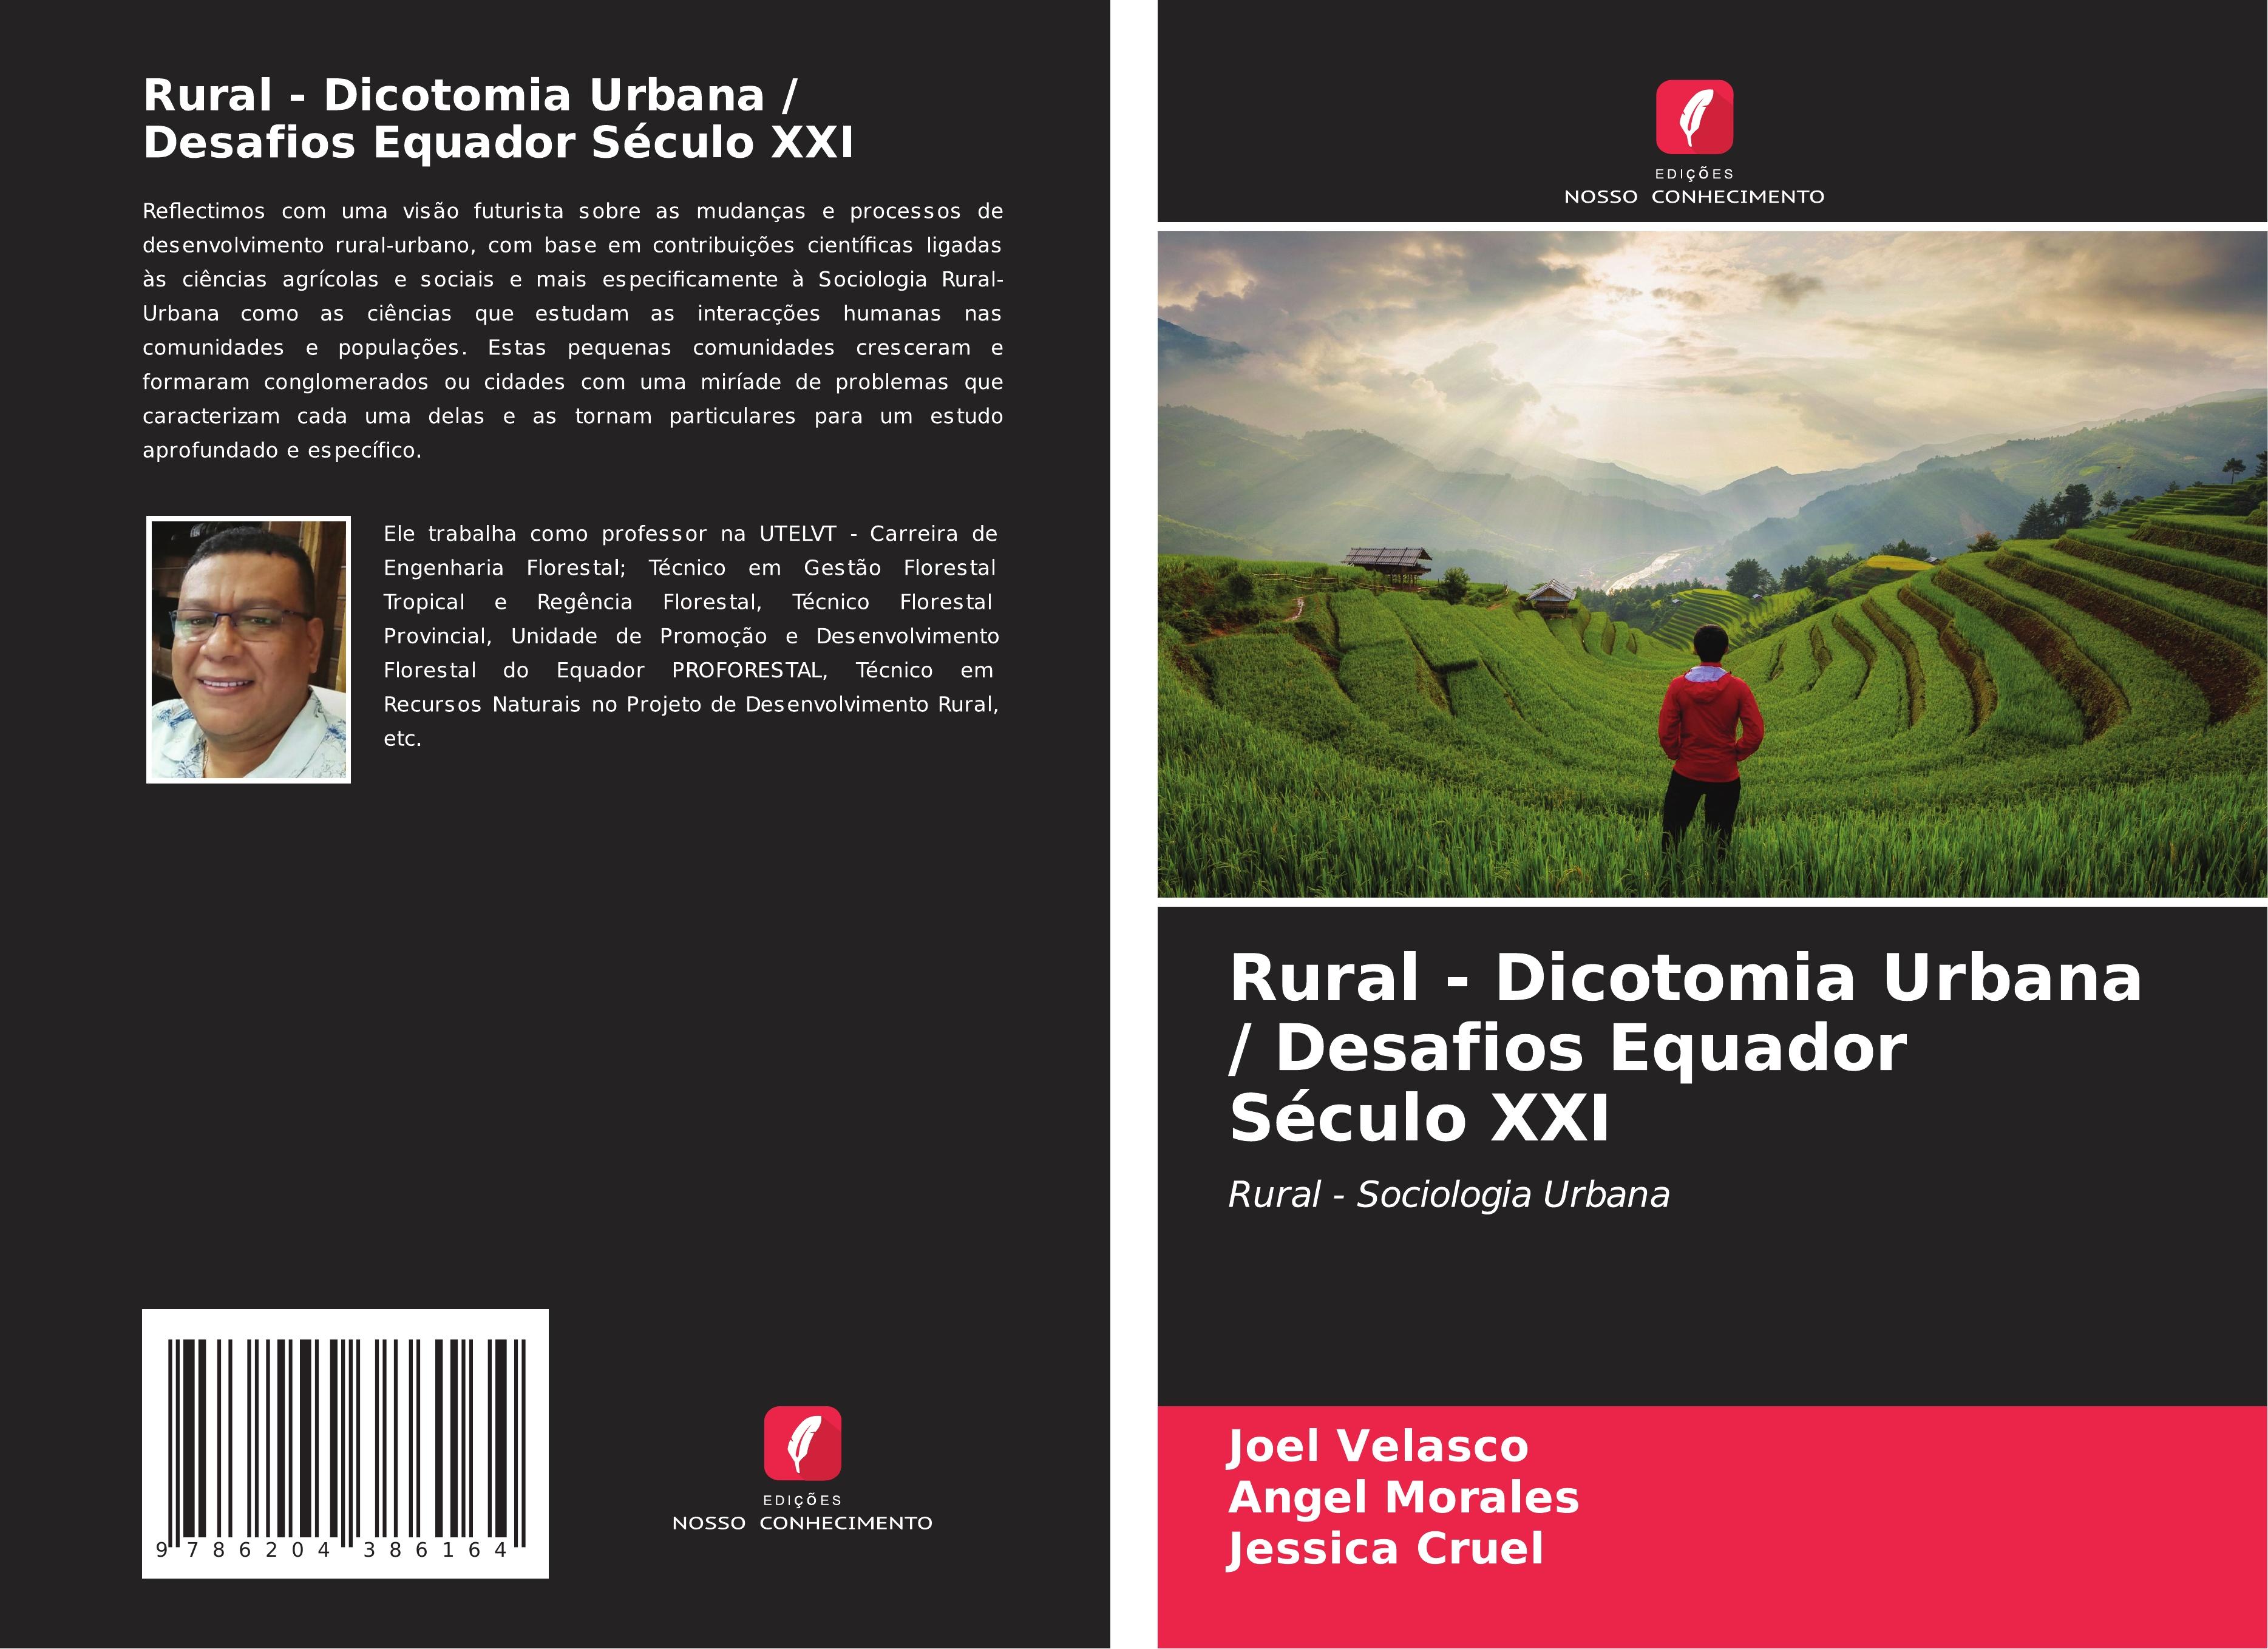 Rural - Dicotomia Urbana / Desafios Equador Século XXI - Velasco, Joel Morales, Angel Cruel, Jessica